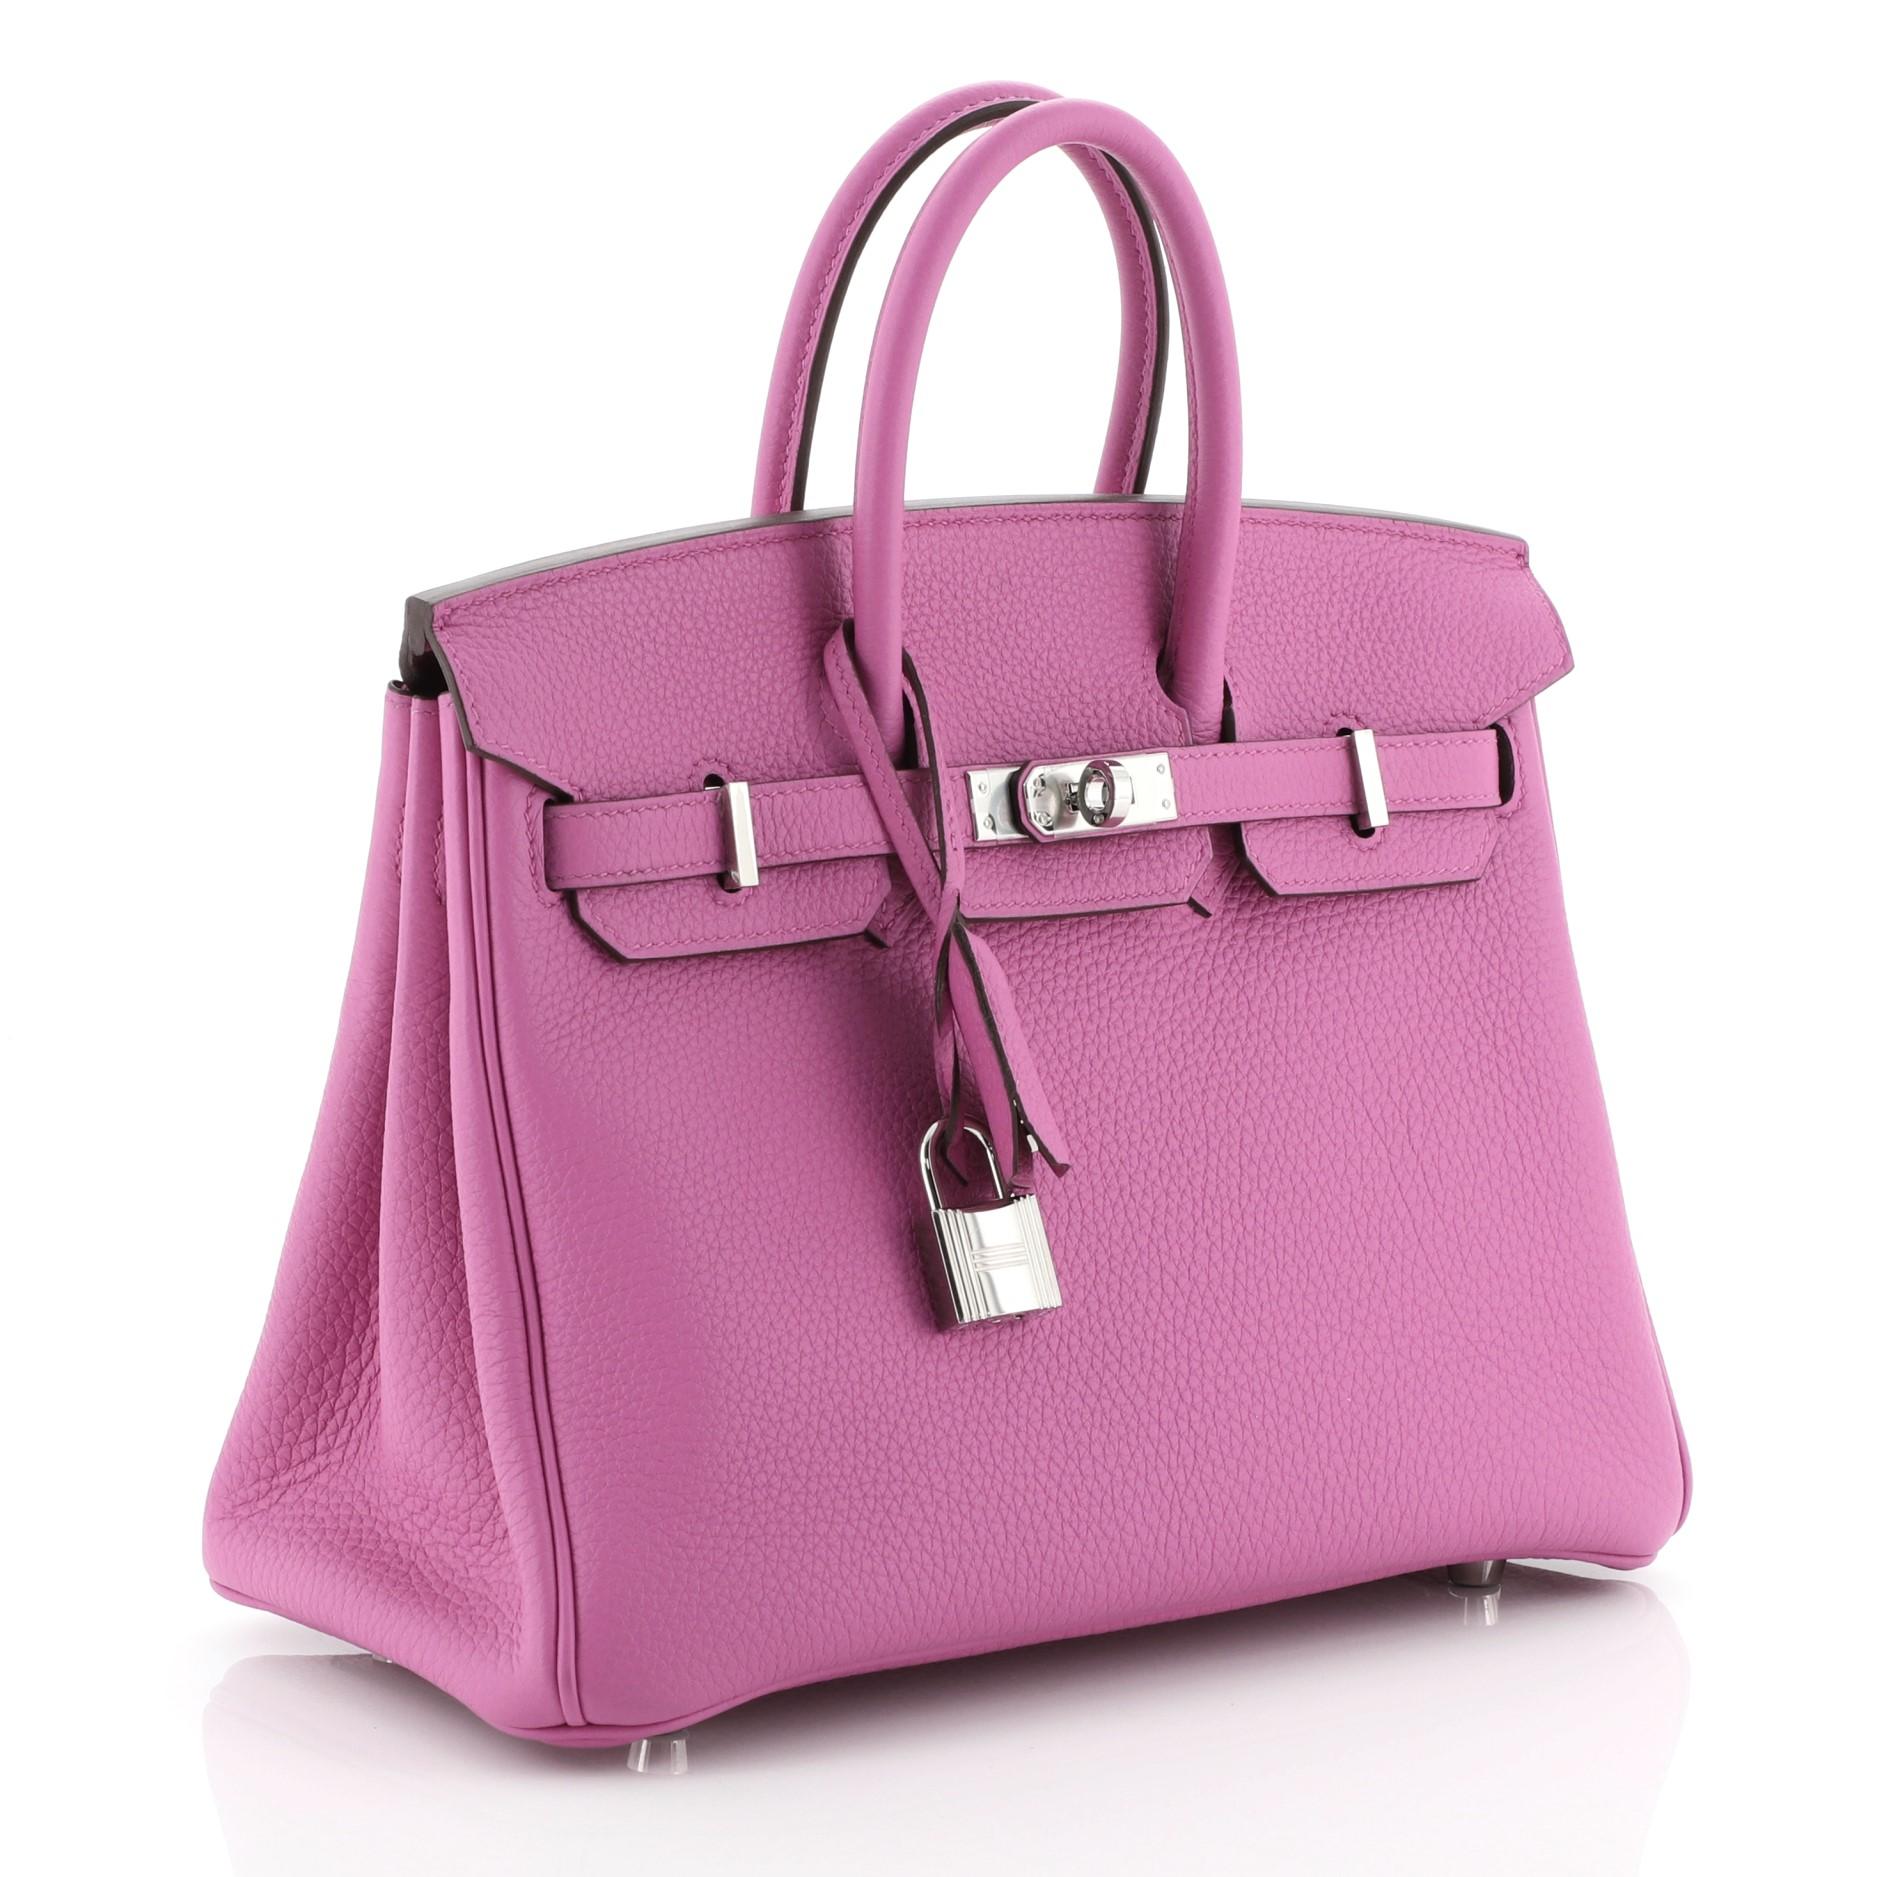 Pink Hermes Birkin Handbag Rose Magnolia Togo with Palladium Hardware 25